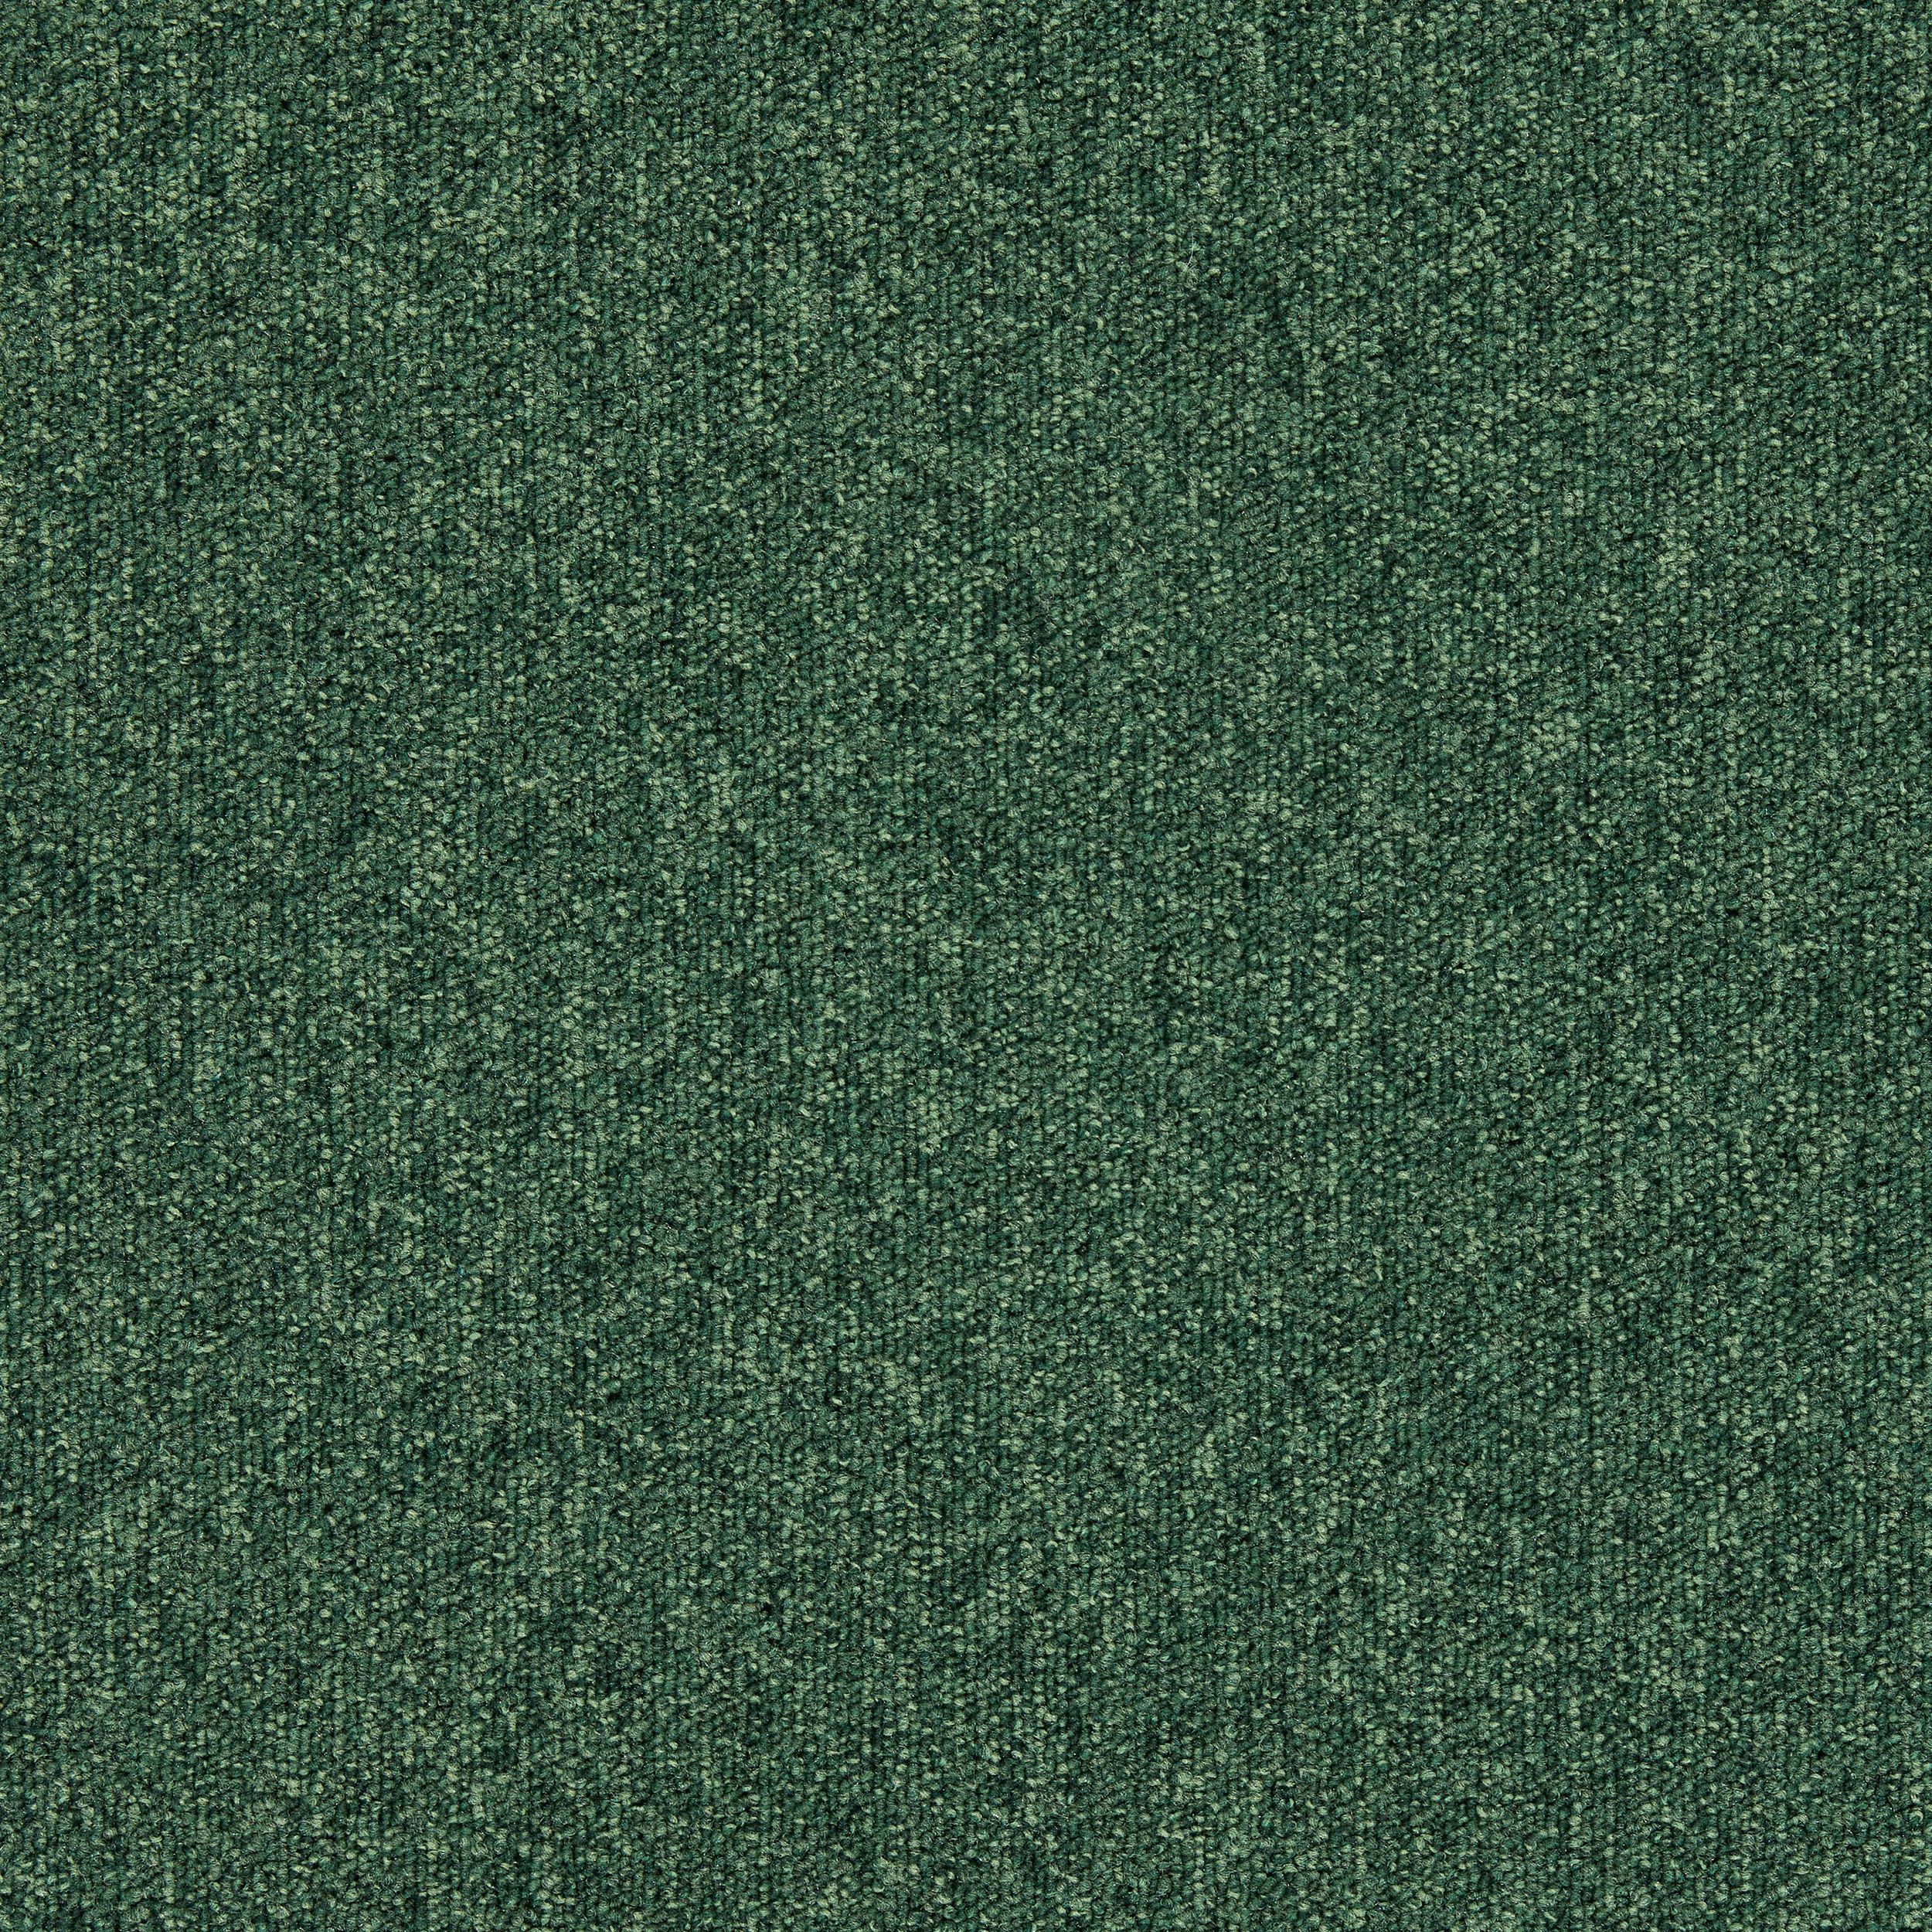 Heuga 727 Carpet Tile In Bottle Green número de imagen 9